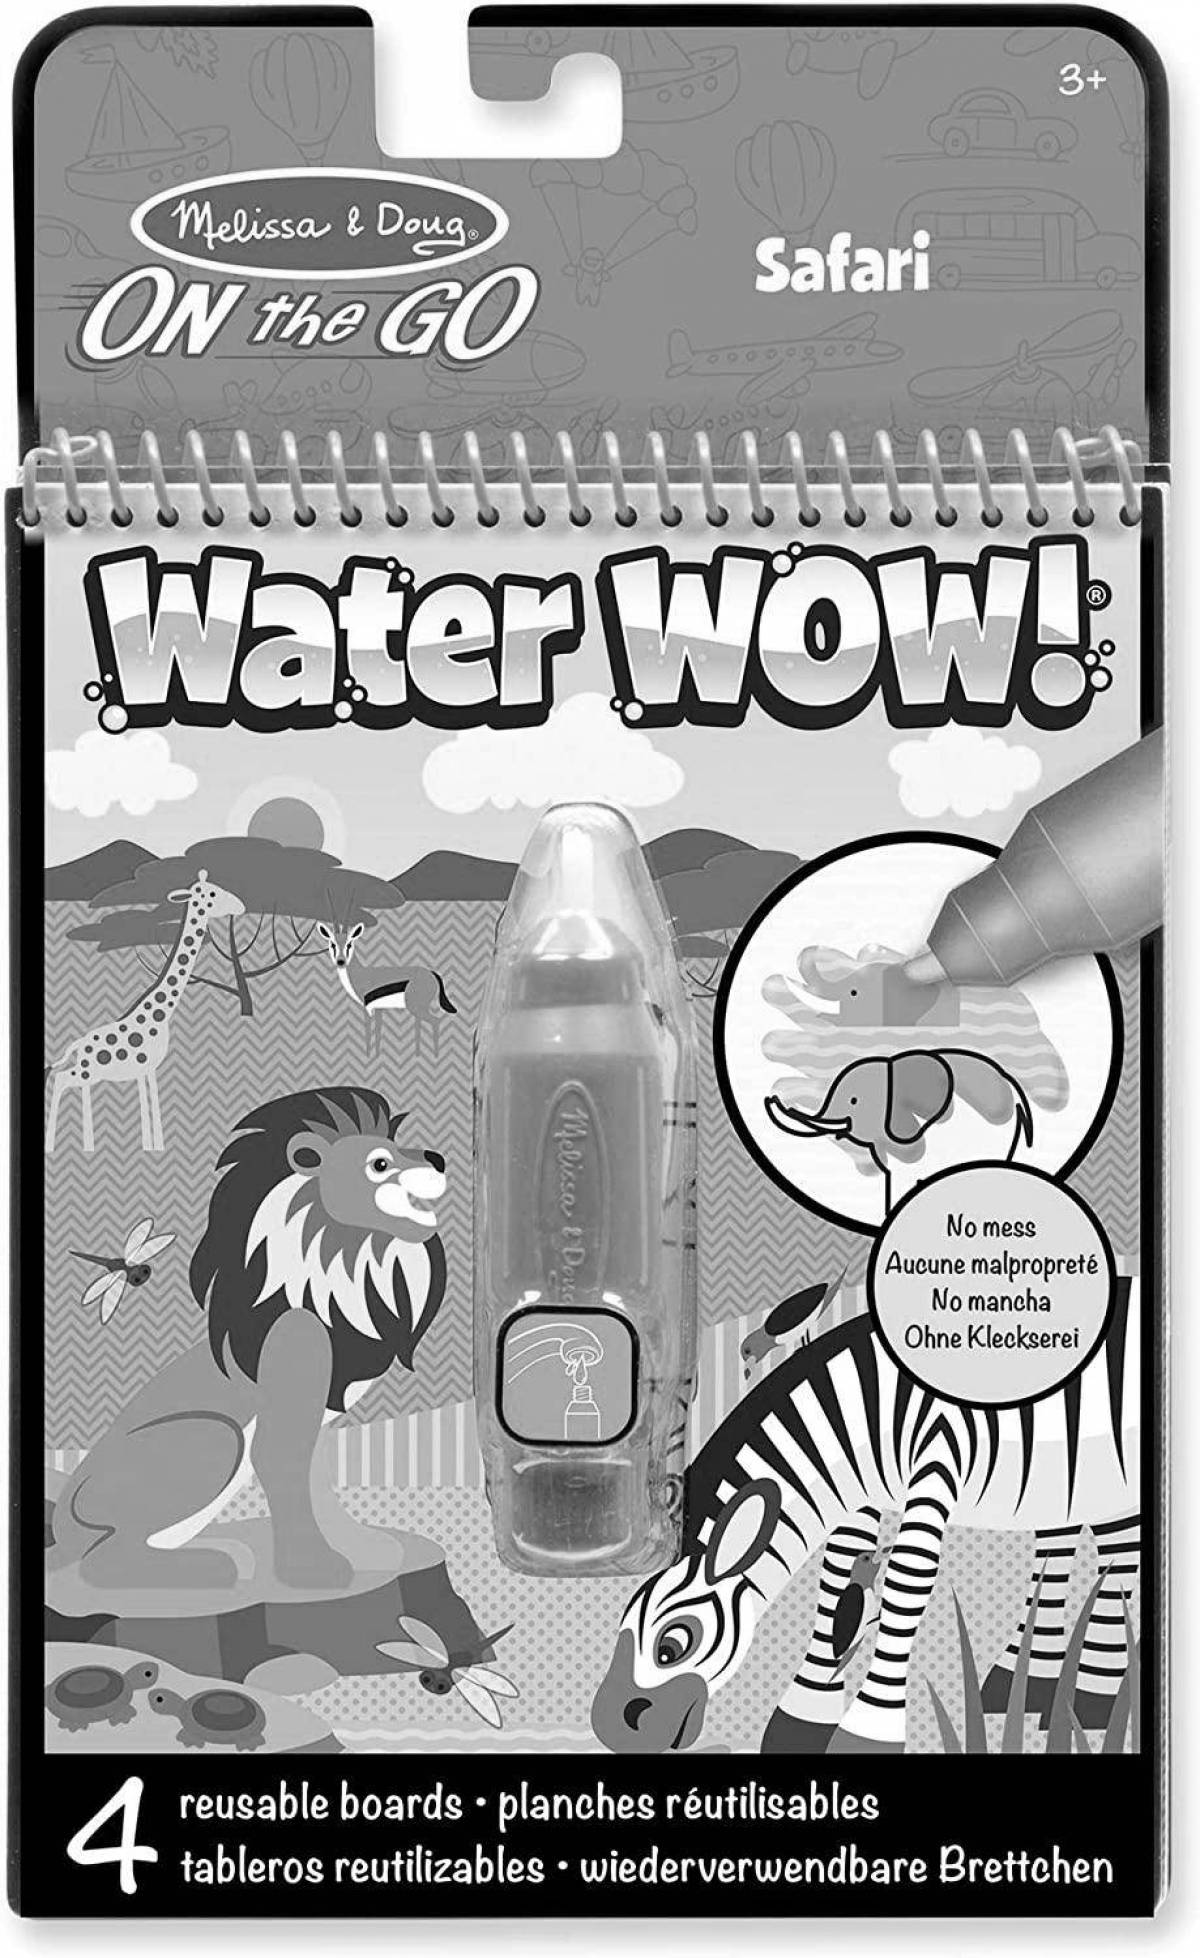 Чудесная вода wow coloring page